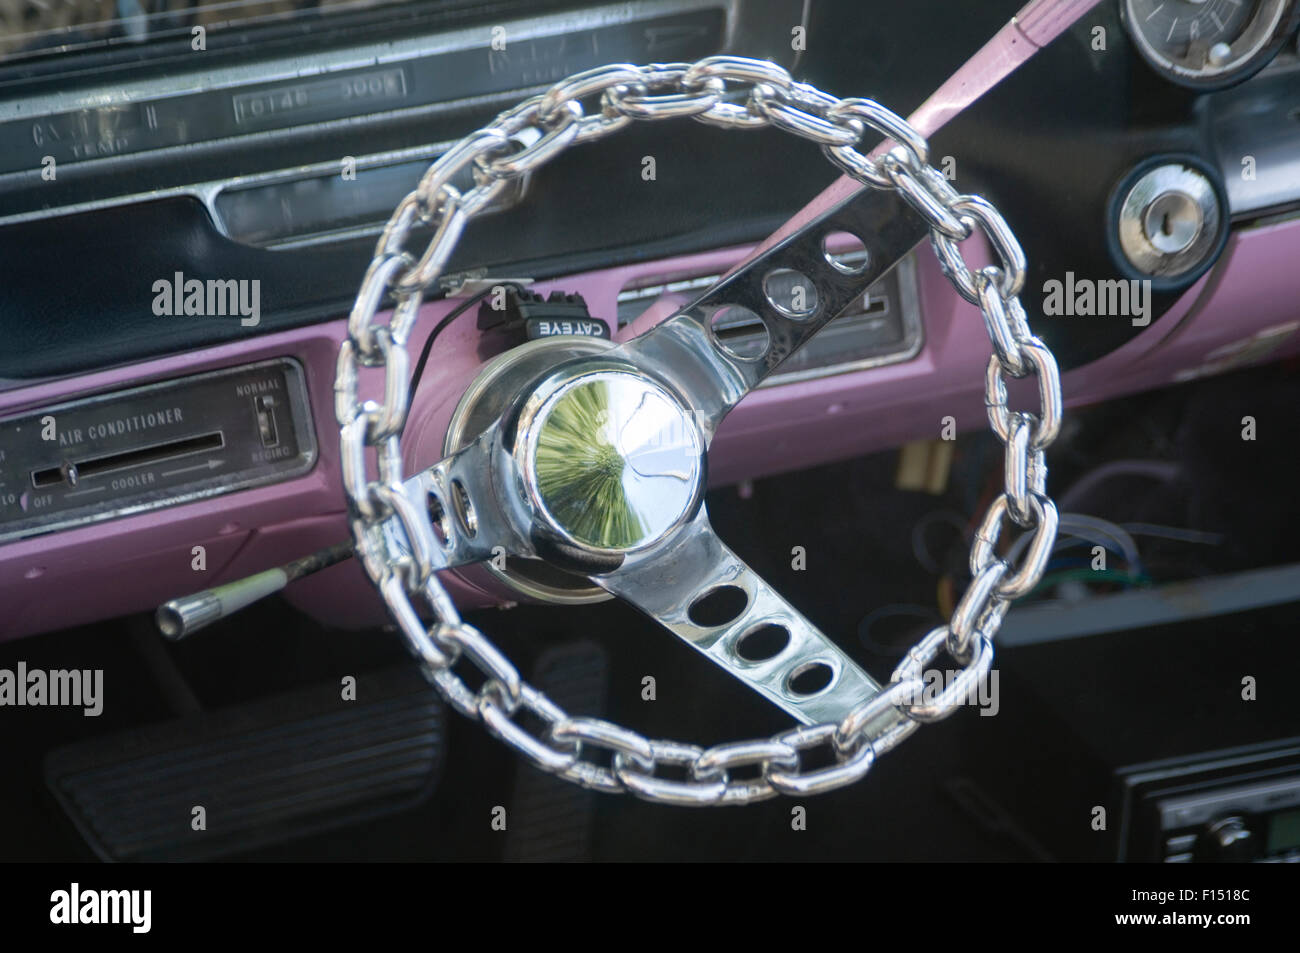 chain link steering wheel wheels chainlink custom car cars customized customised Stock Photo